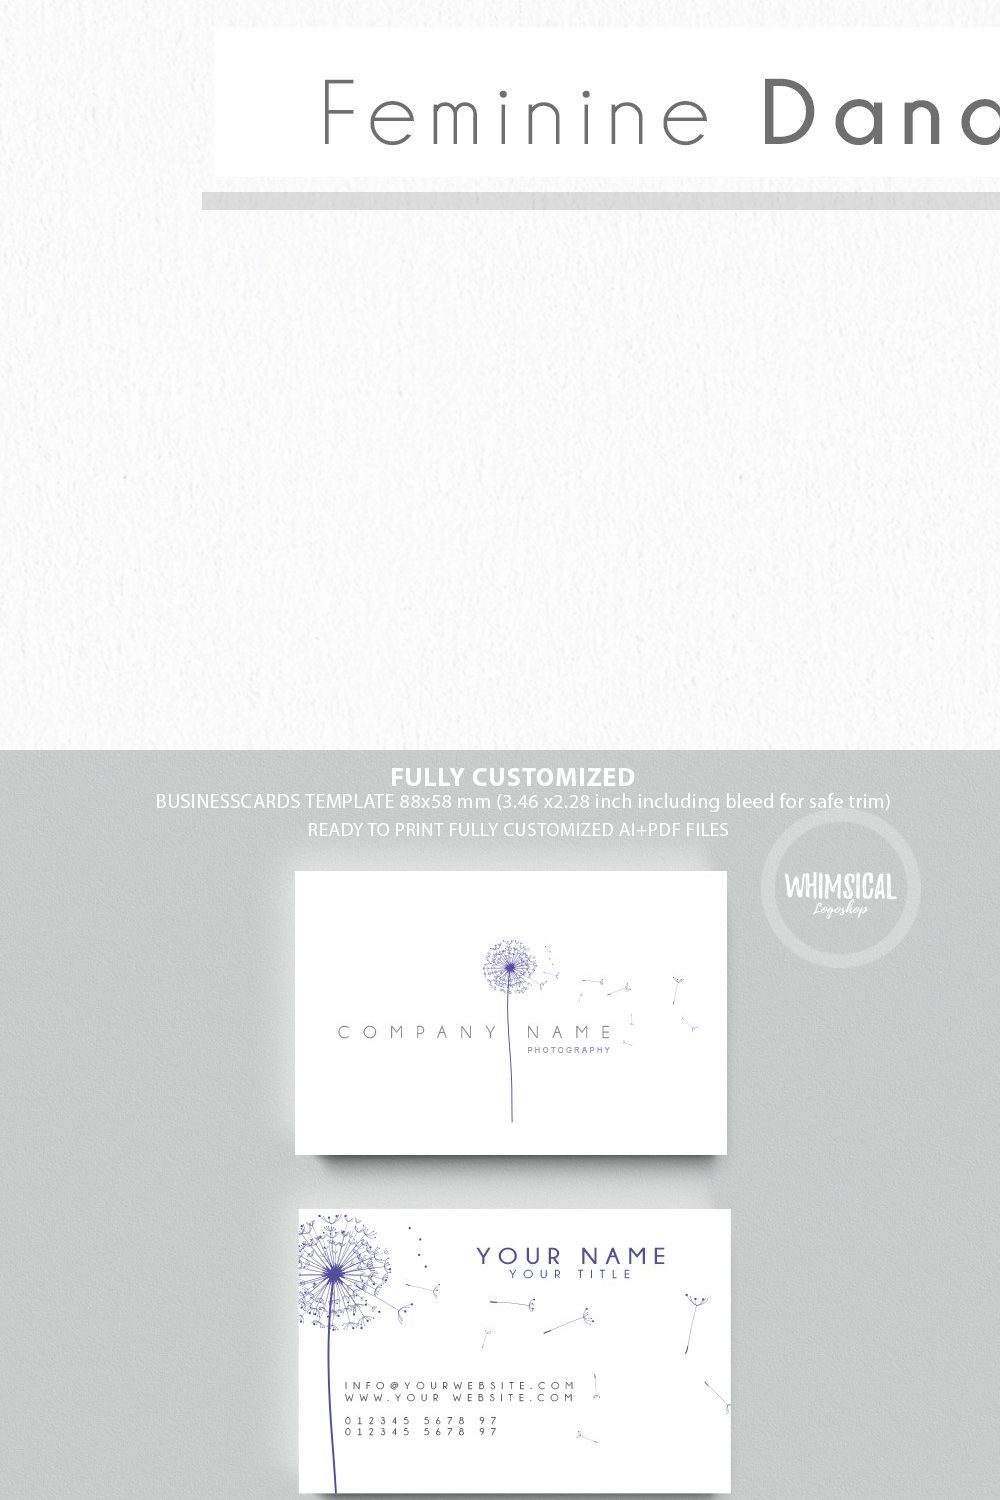 Feminine Dandelion logo+Businesscard pinterest preview image.